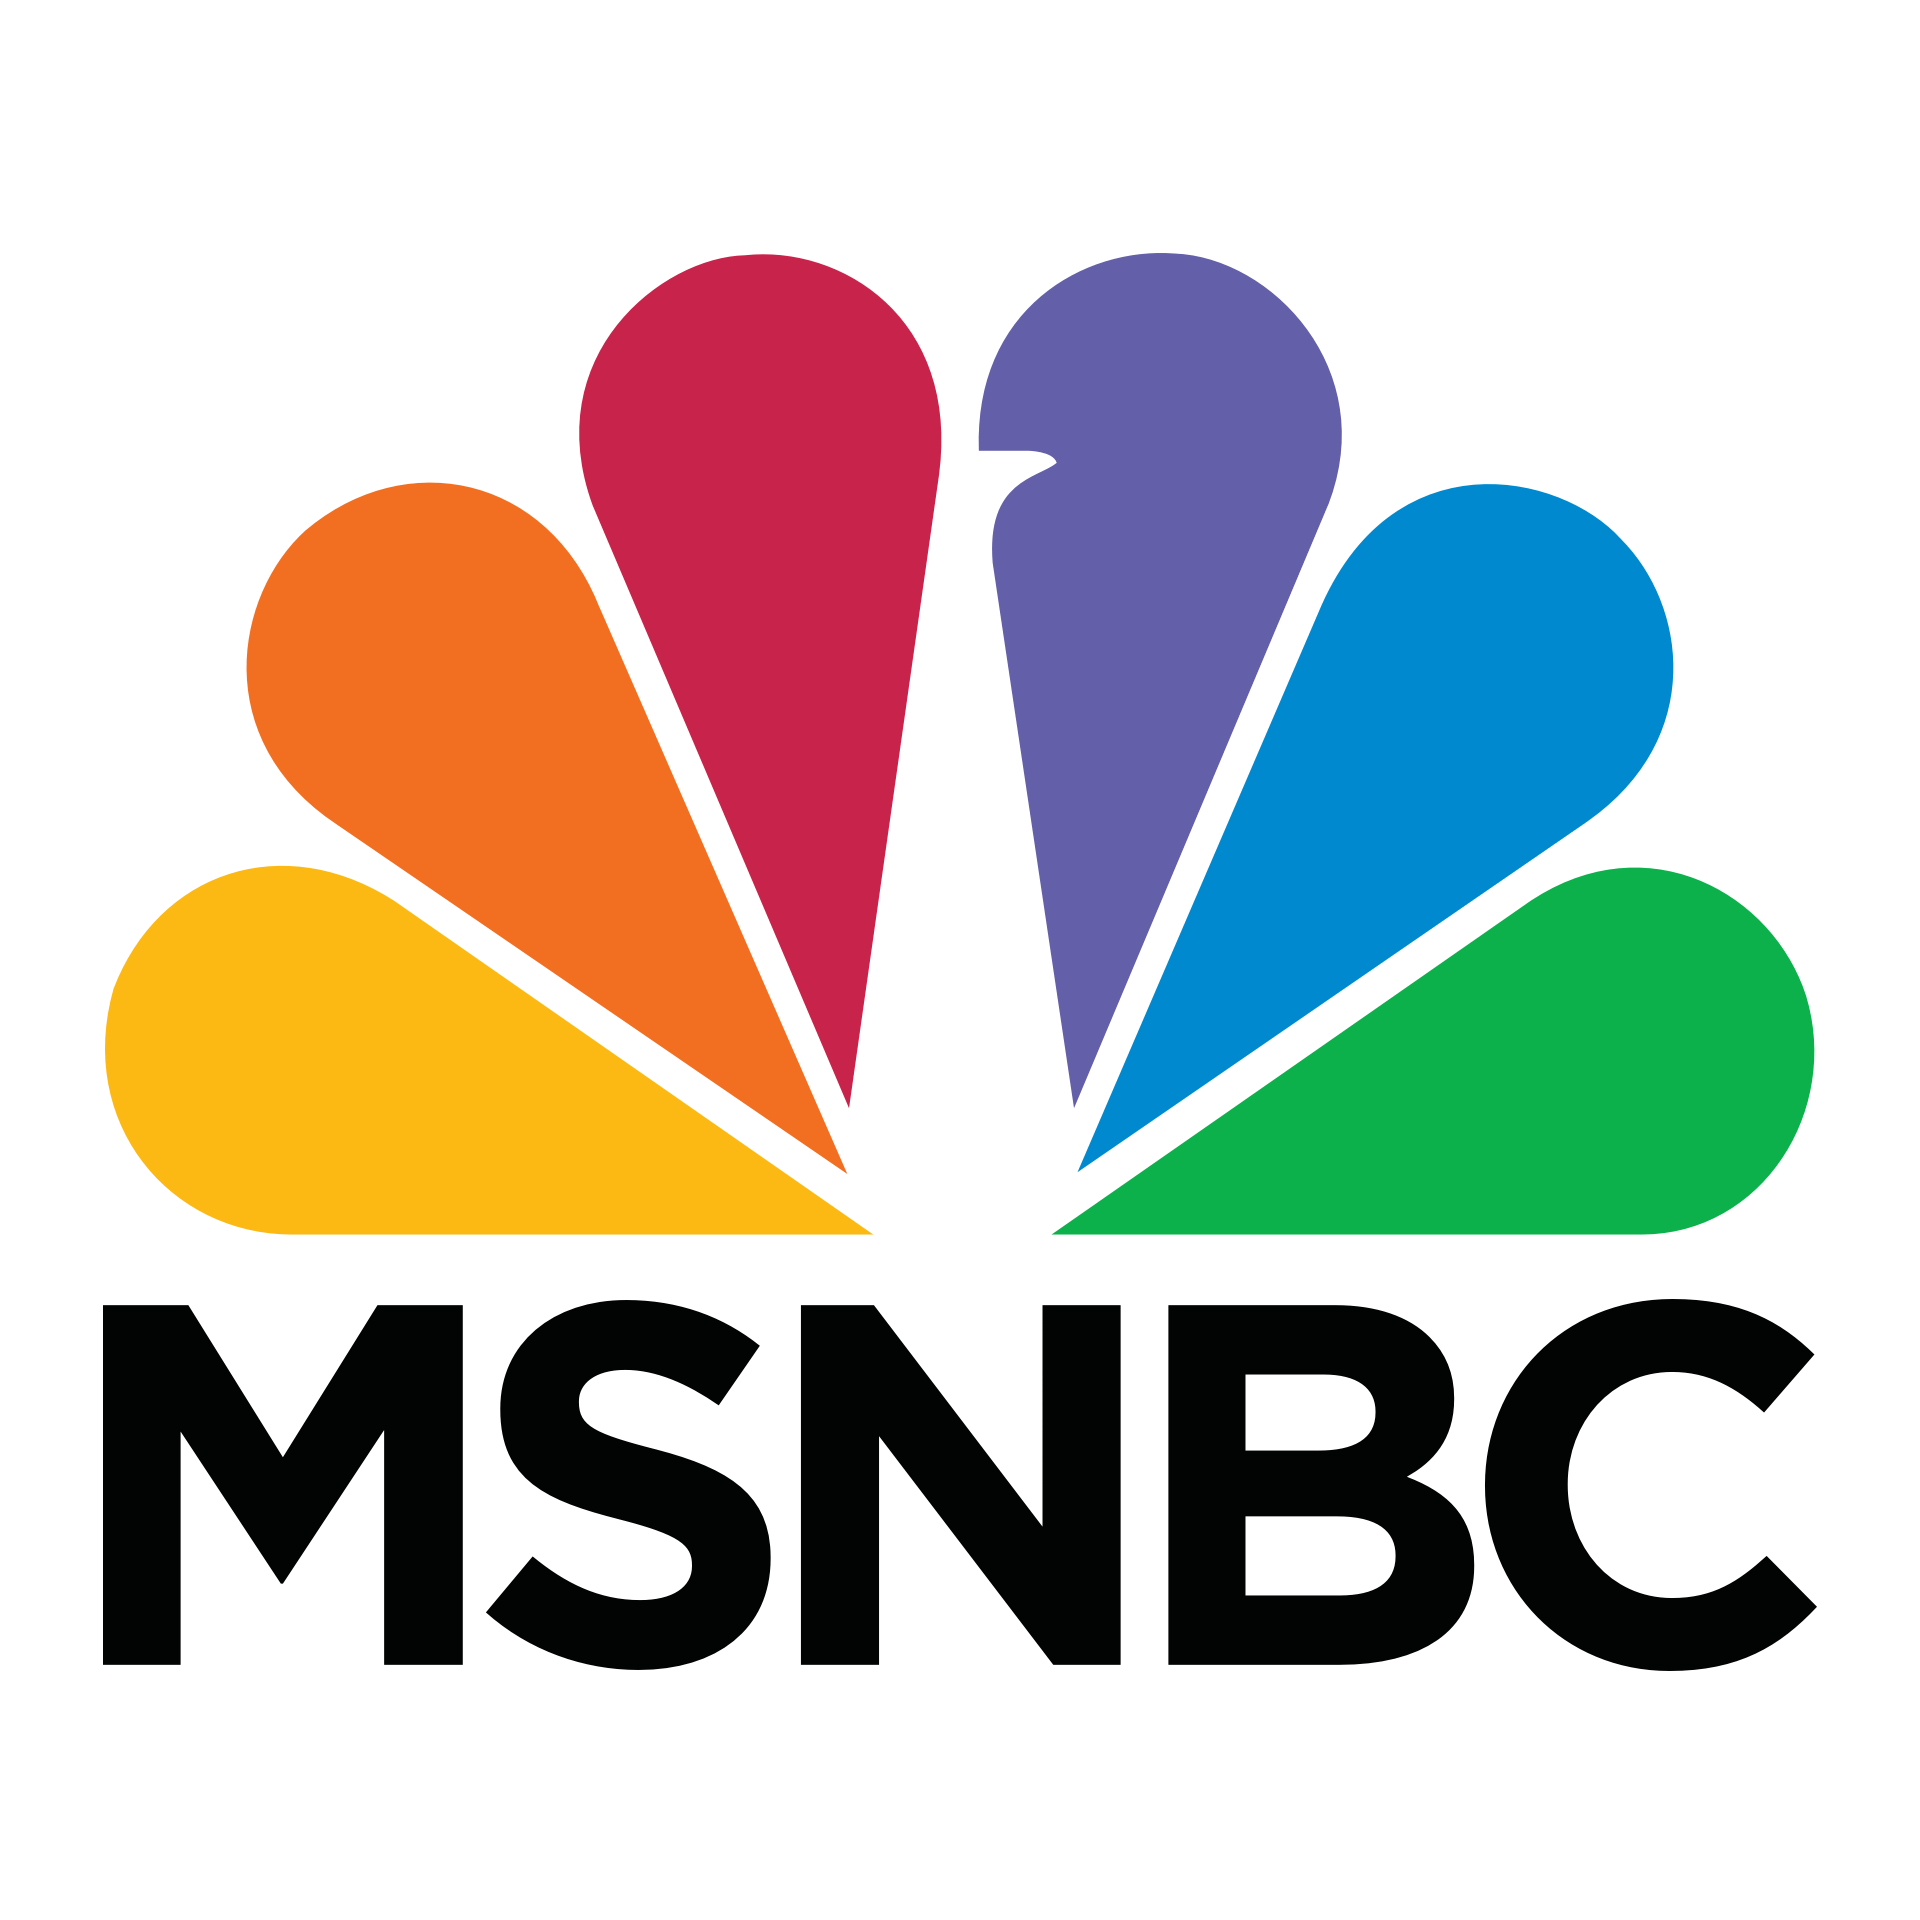 MSNBC Logo - Logo Msnbc PNG Transparent Logo Msnbc.PNG Images. | PlusPNG